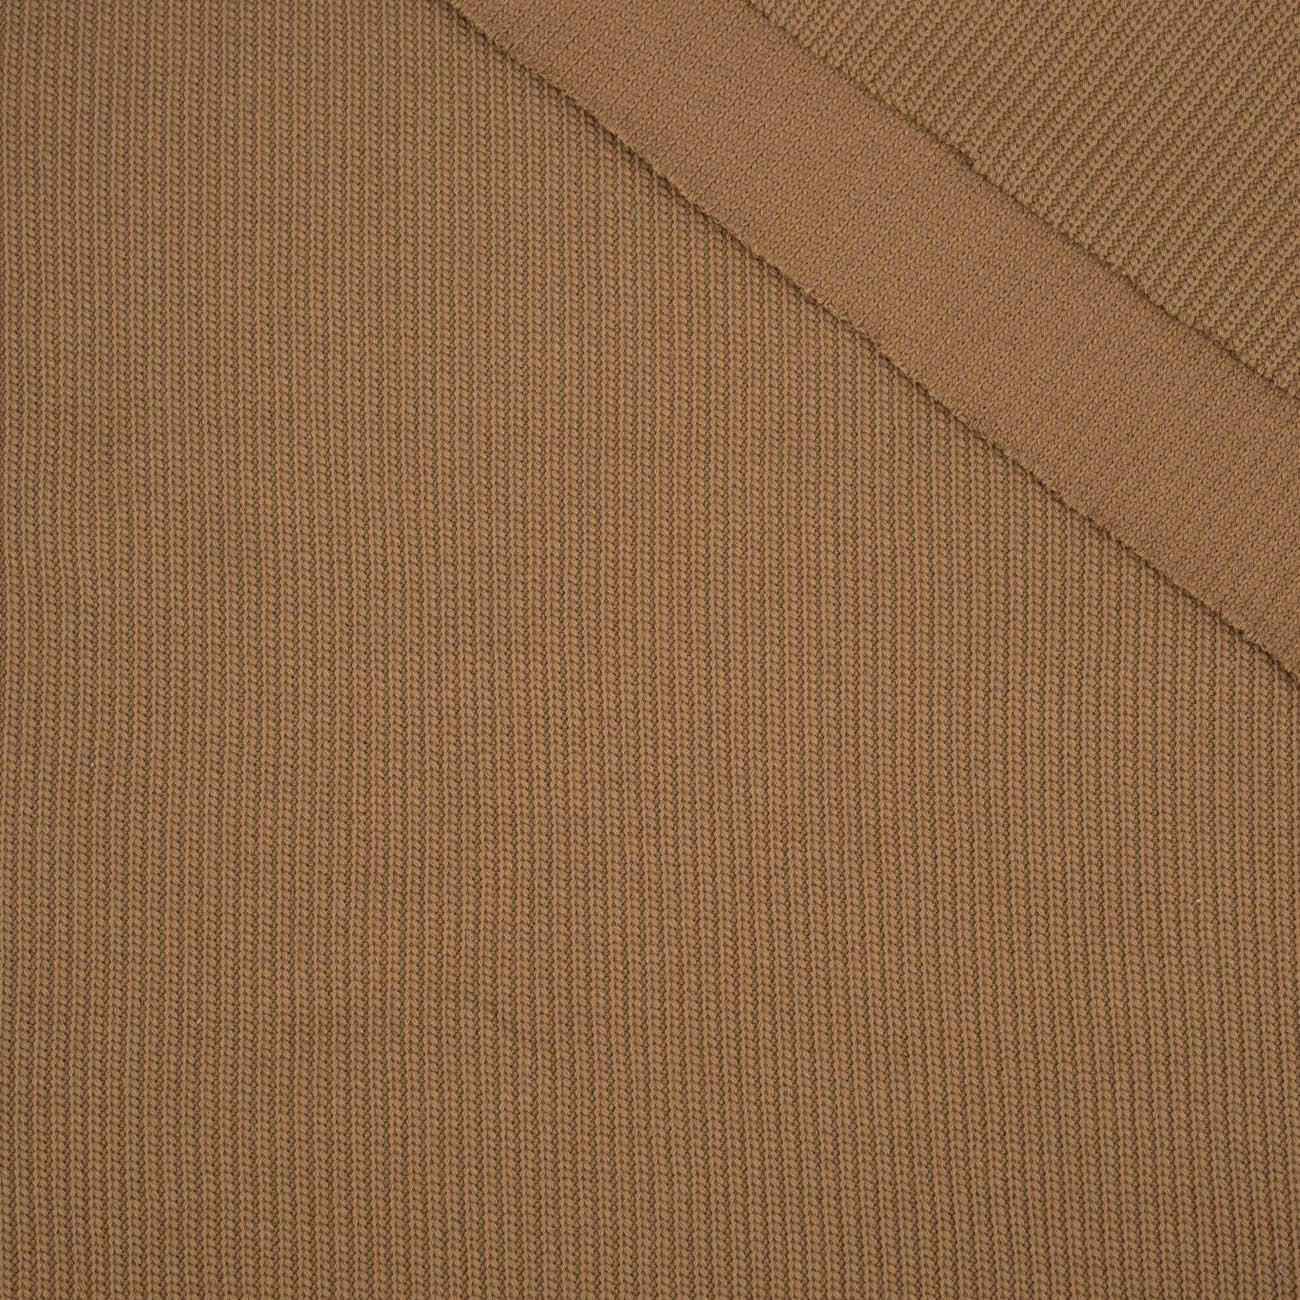 COFFEE - Cotton sweater knit fabric 320g